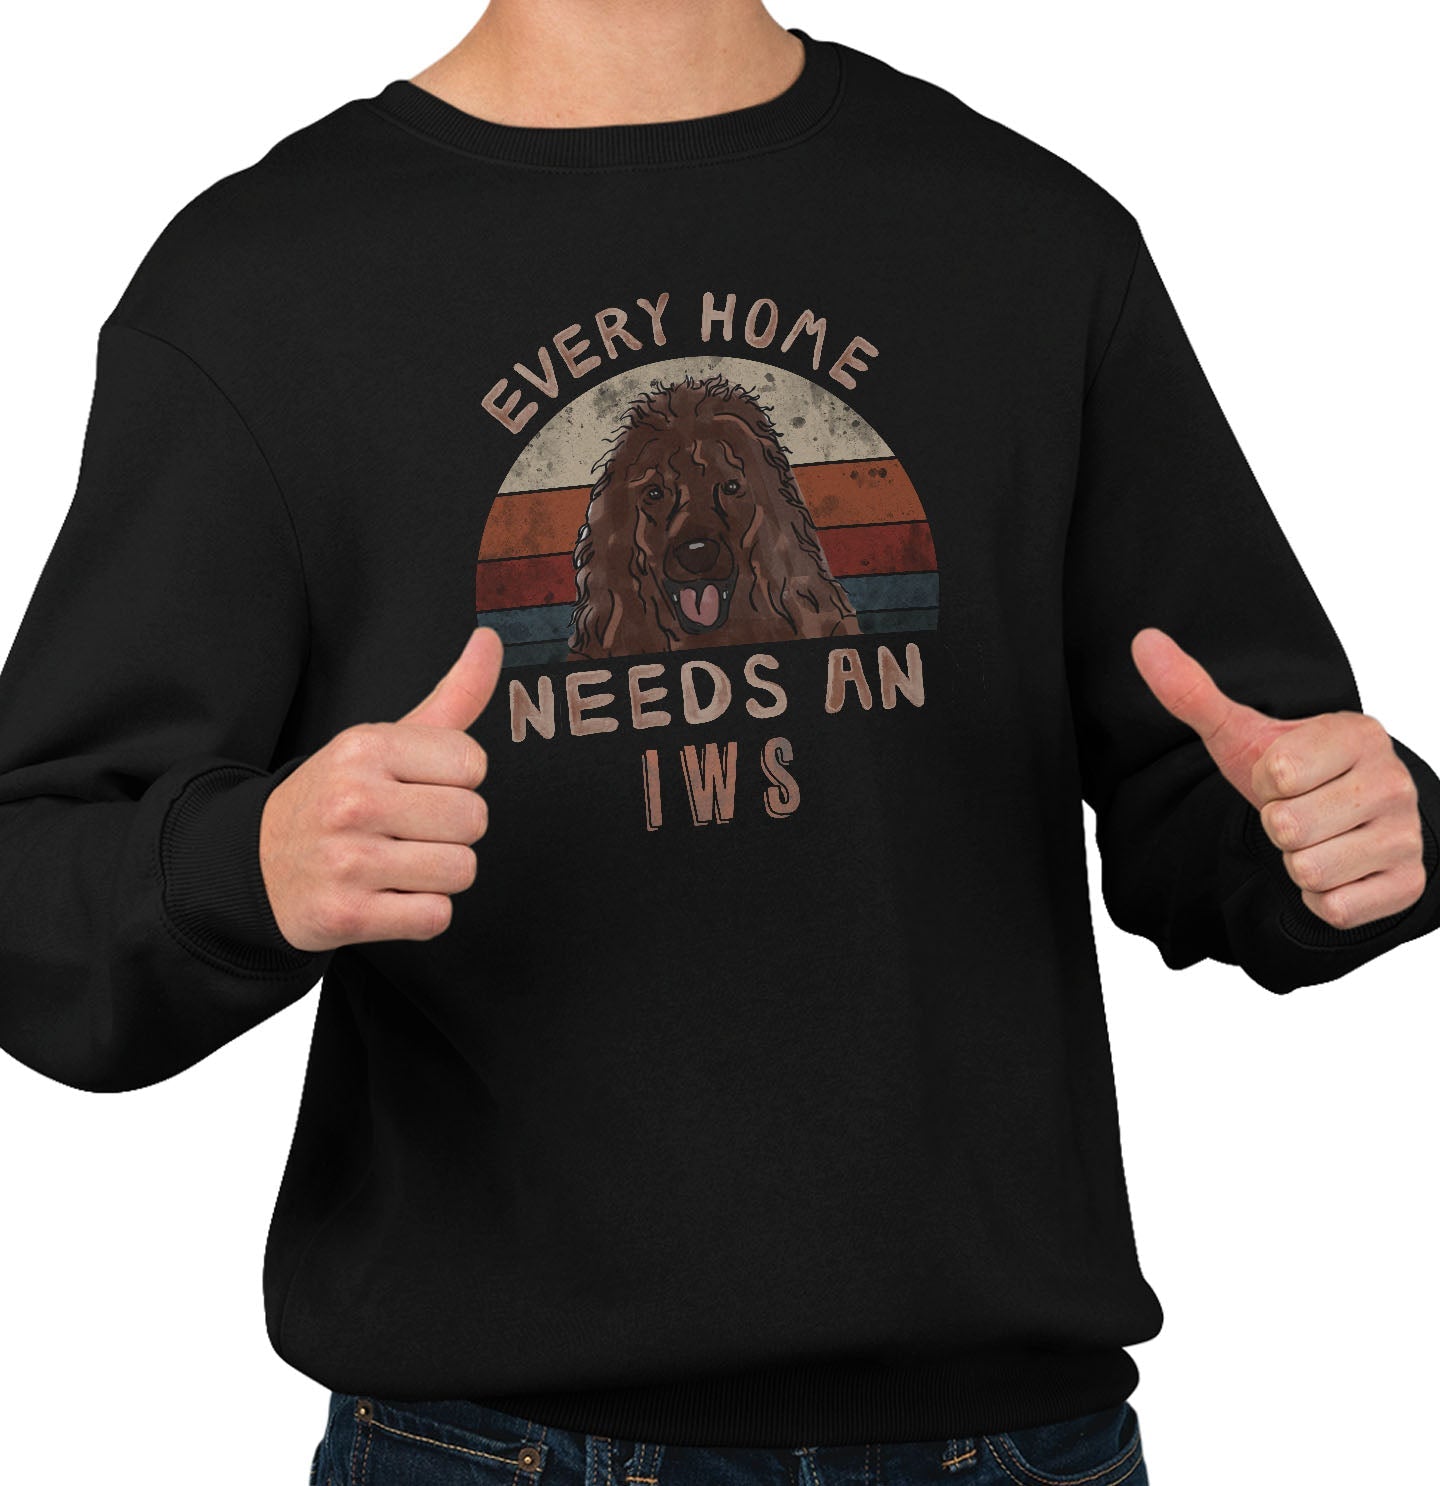 Every Home Needs a Irish Water Spaniel - Adult Unisex Crewneck Sweatshirt